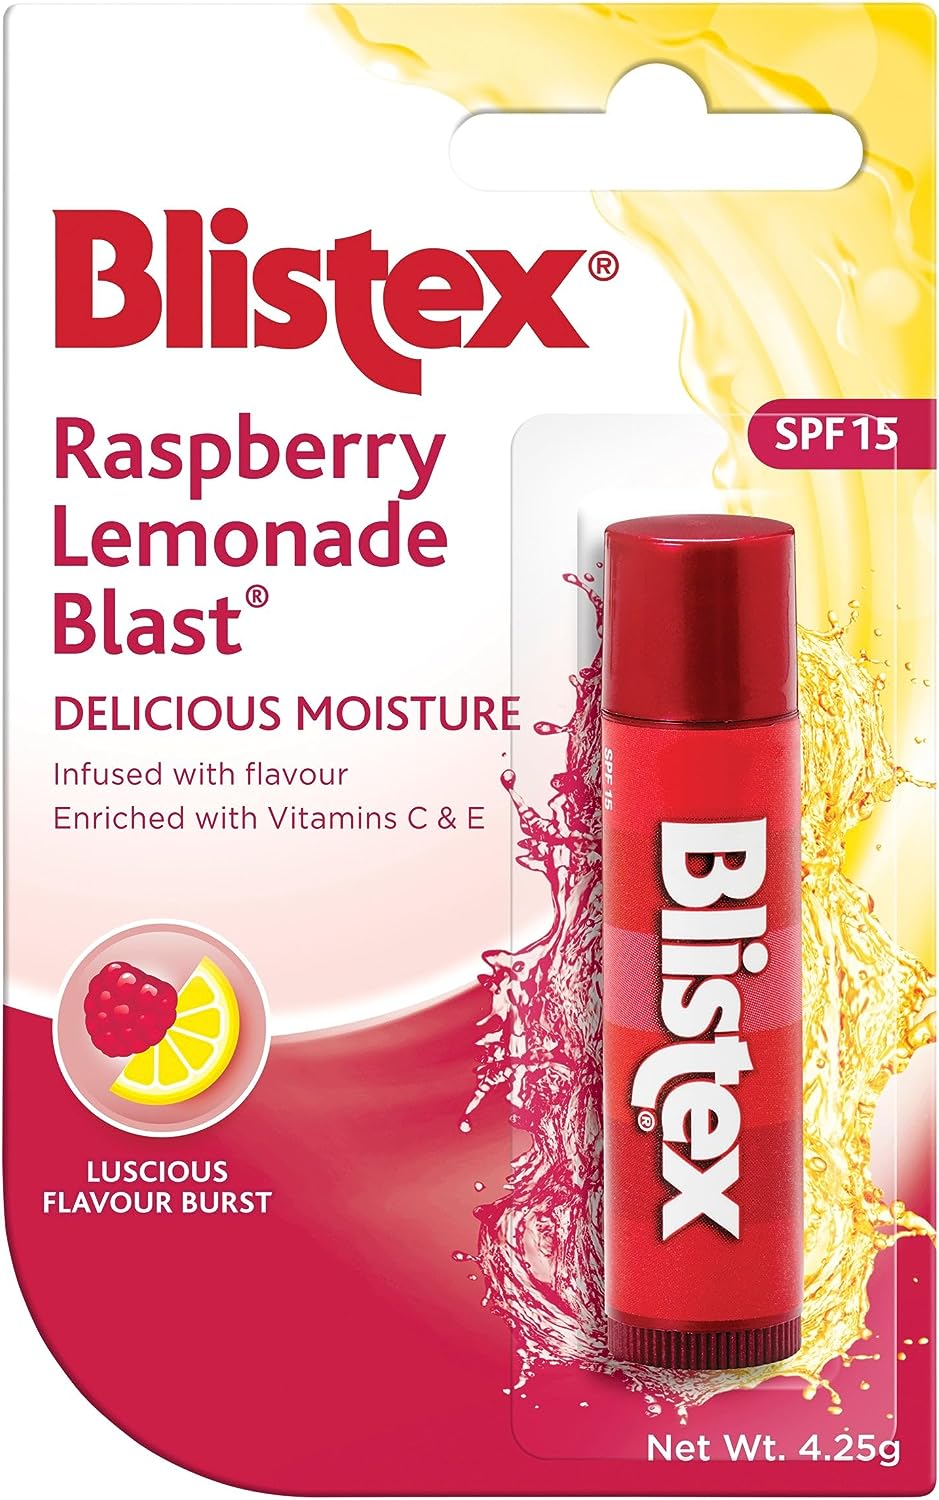 Blistex Raspberry Lemonade Blast SPF 15 Lip Balm 4.25G